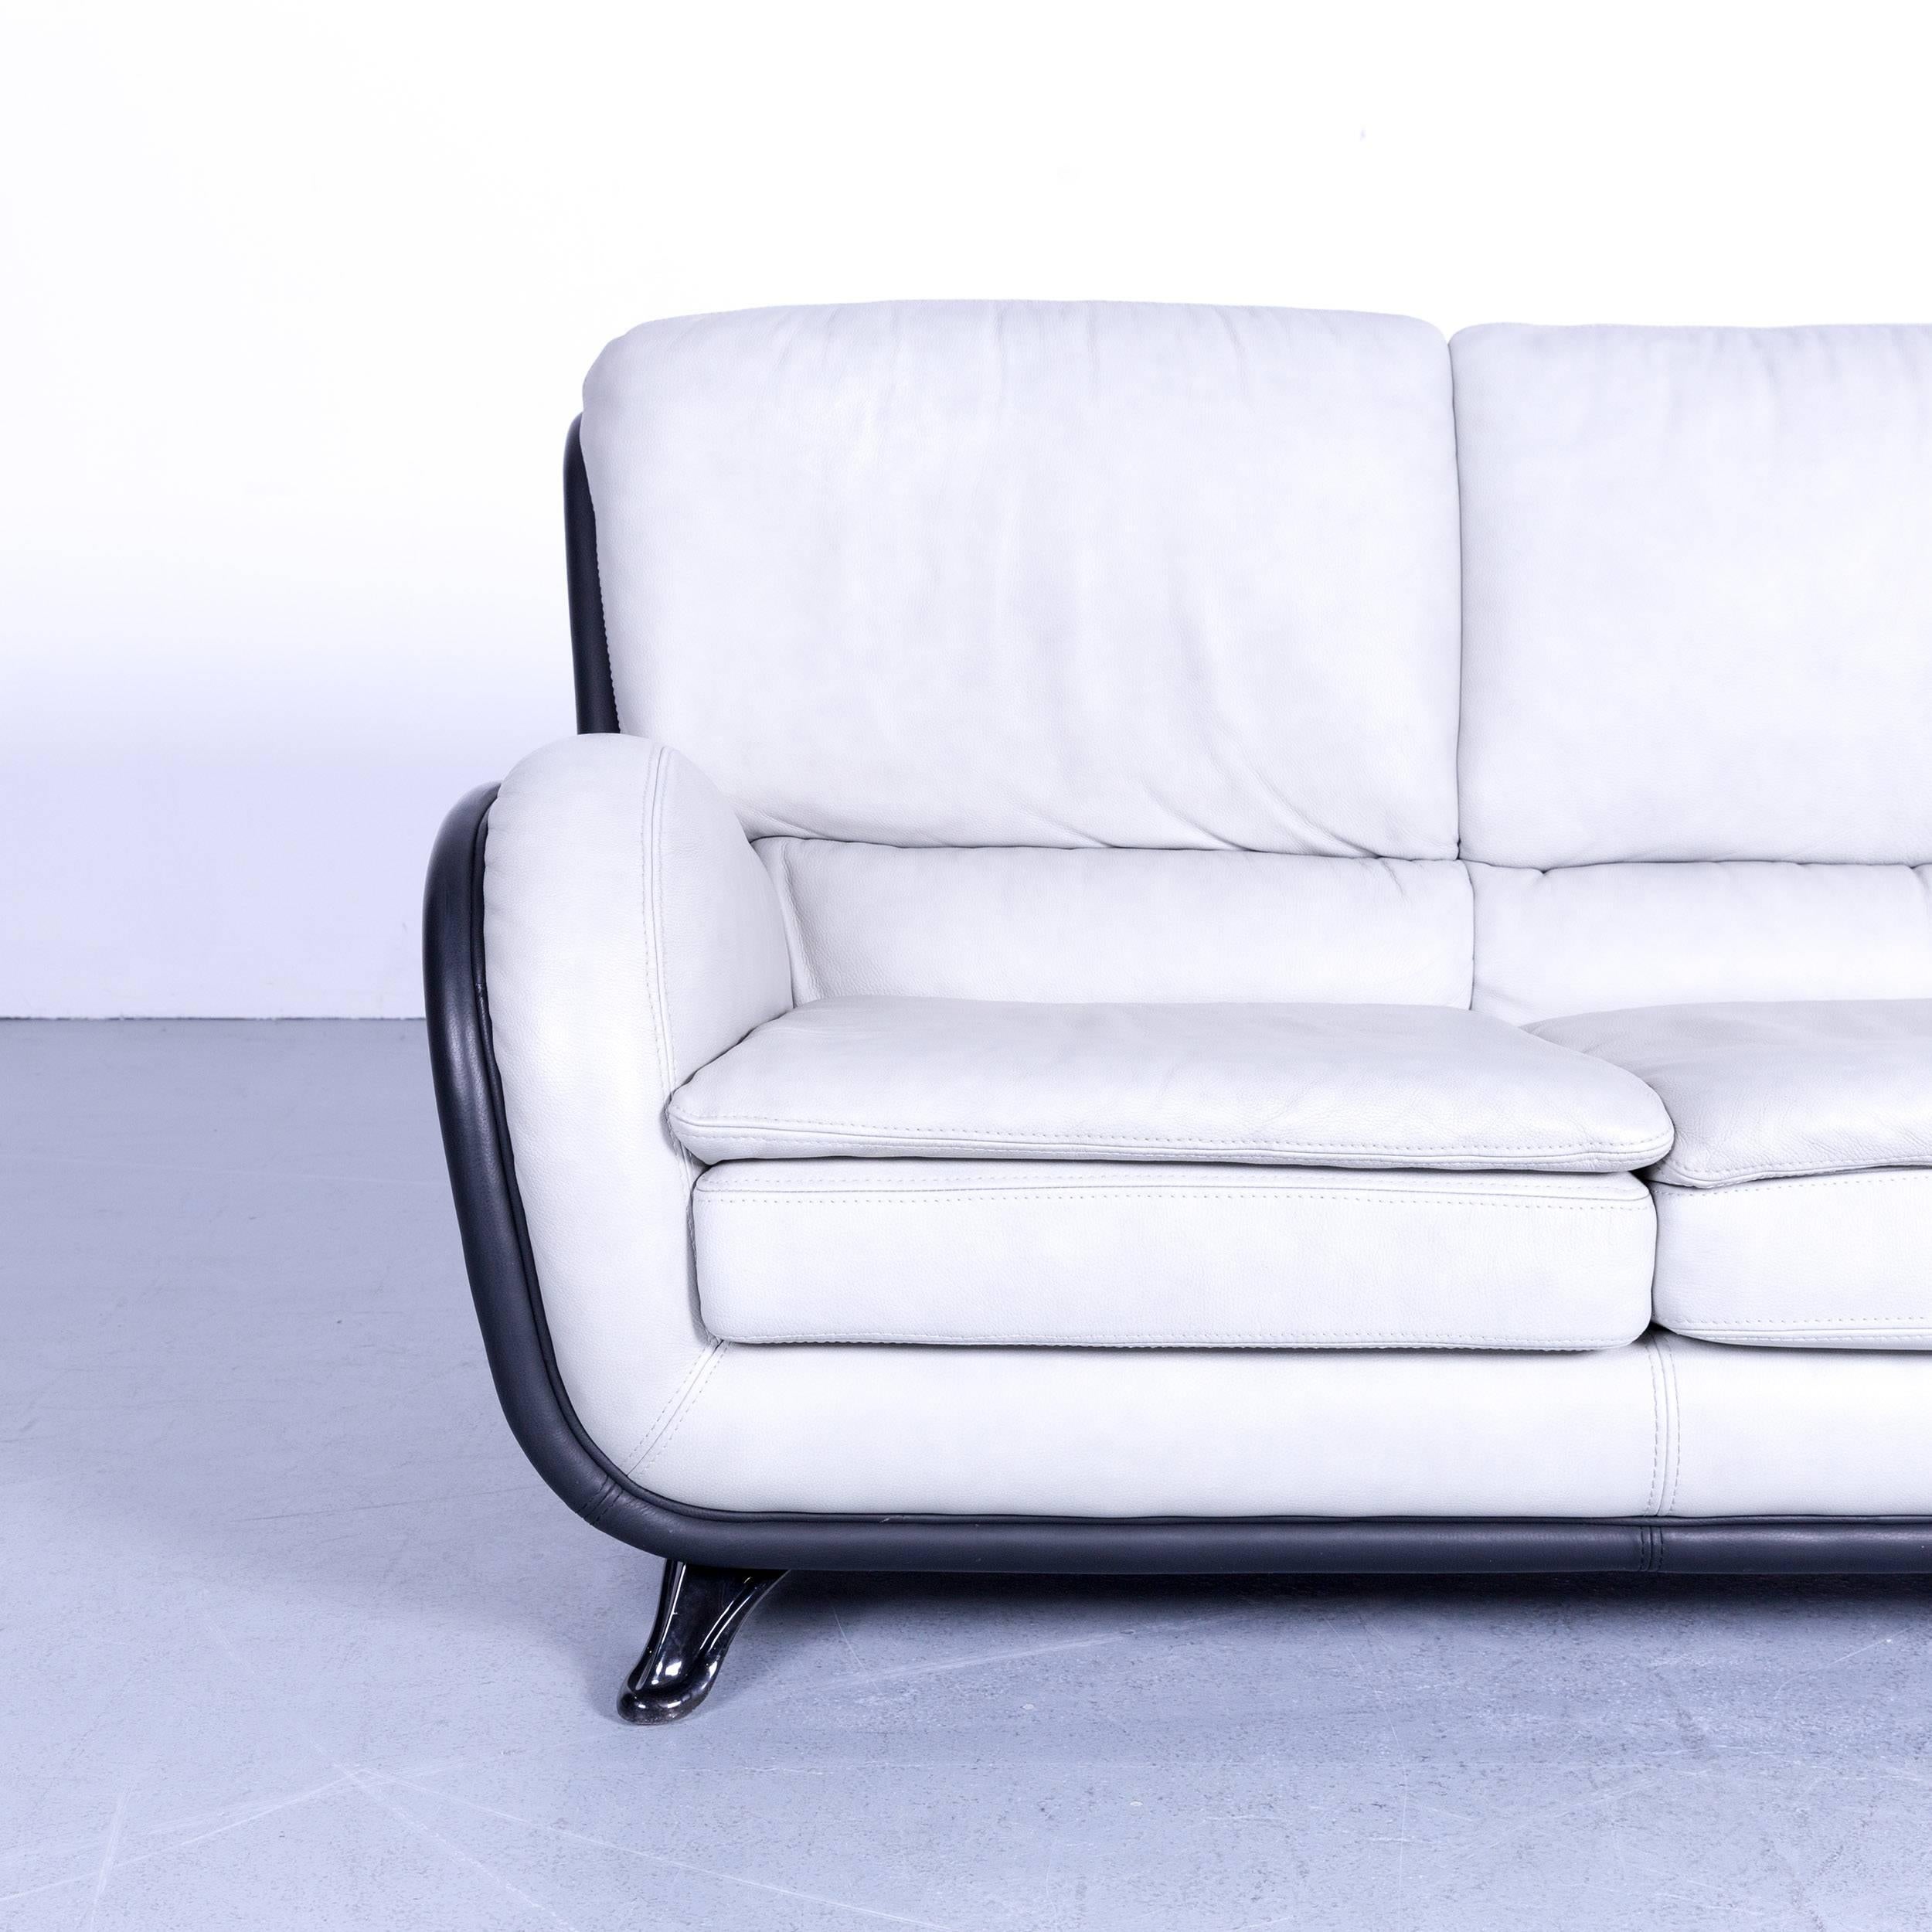 Nieri designer sofa made of leather in a minimalistic and modern design.